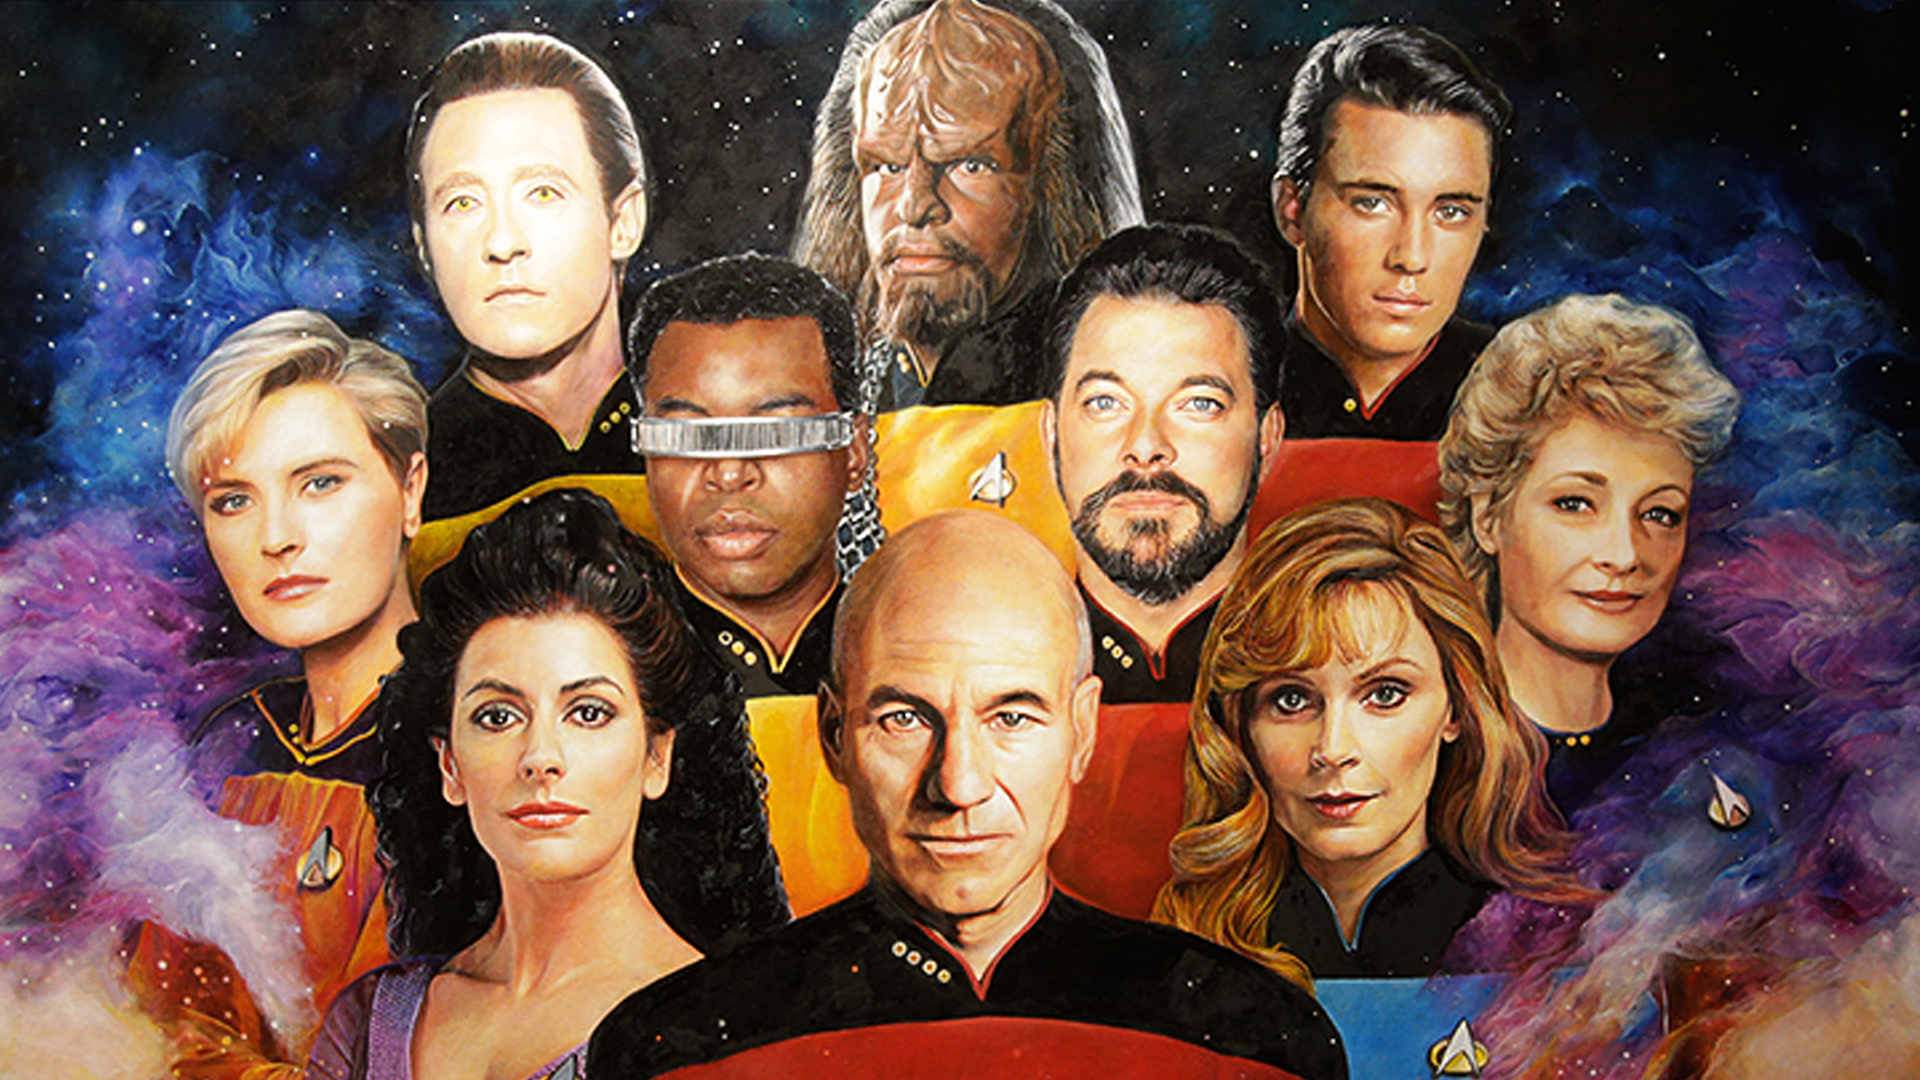 This Star Trek 50th Anniversary Artwork Is Simply Stellar